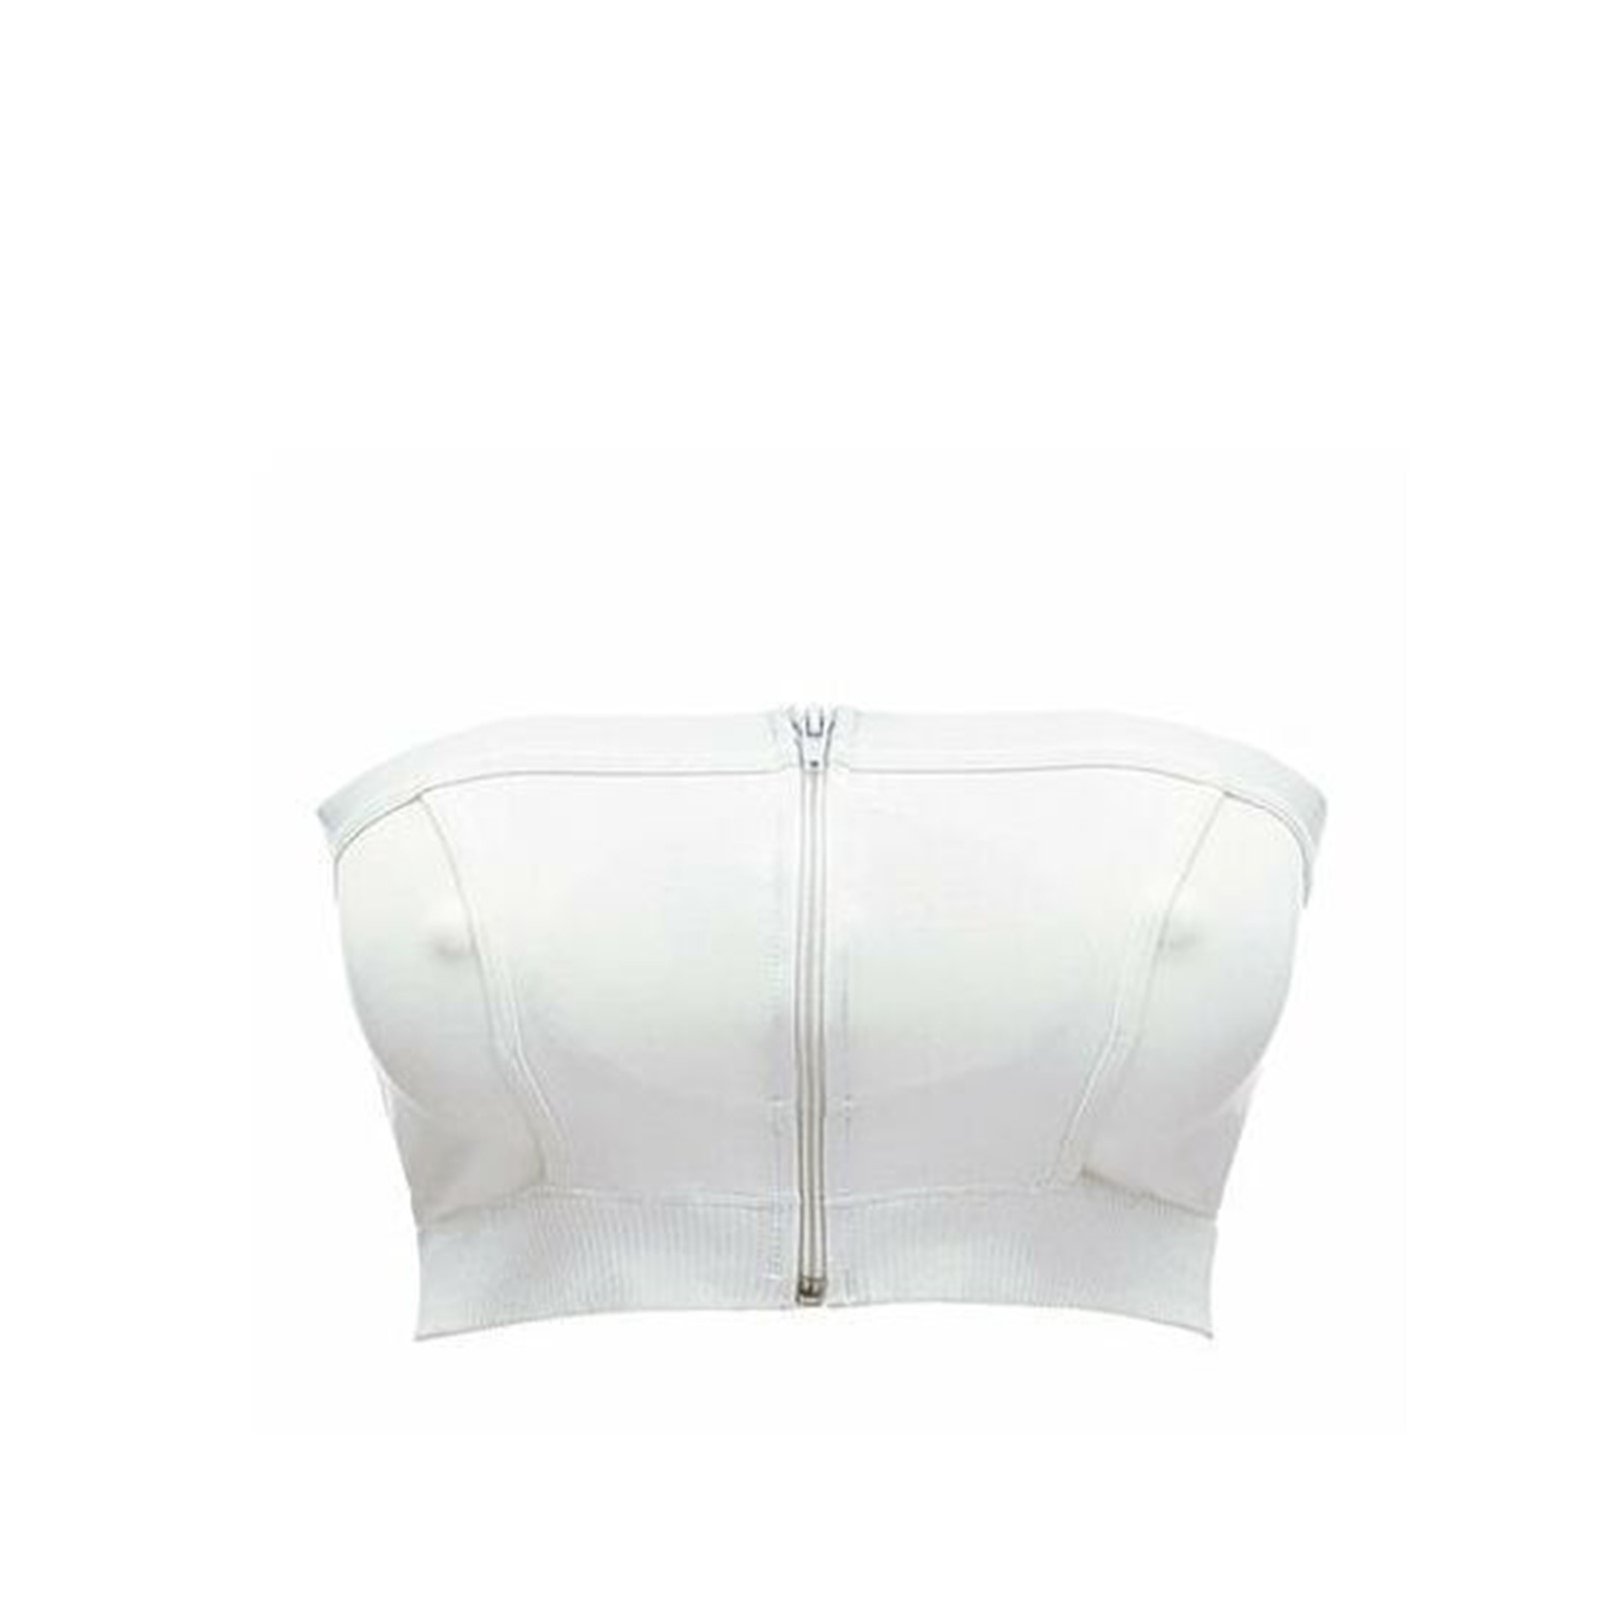 Buy Medela Hands-Free Pumping Bustier White Medium Size x1